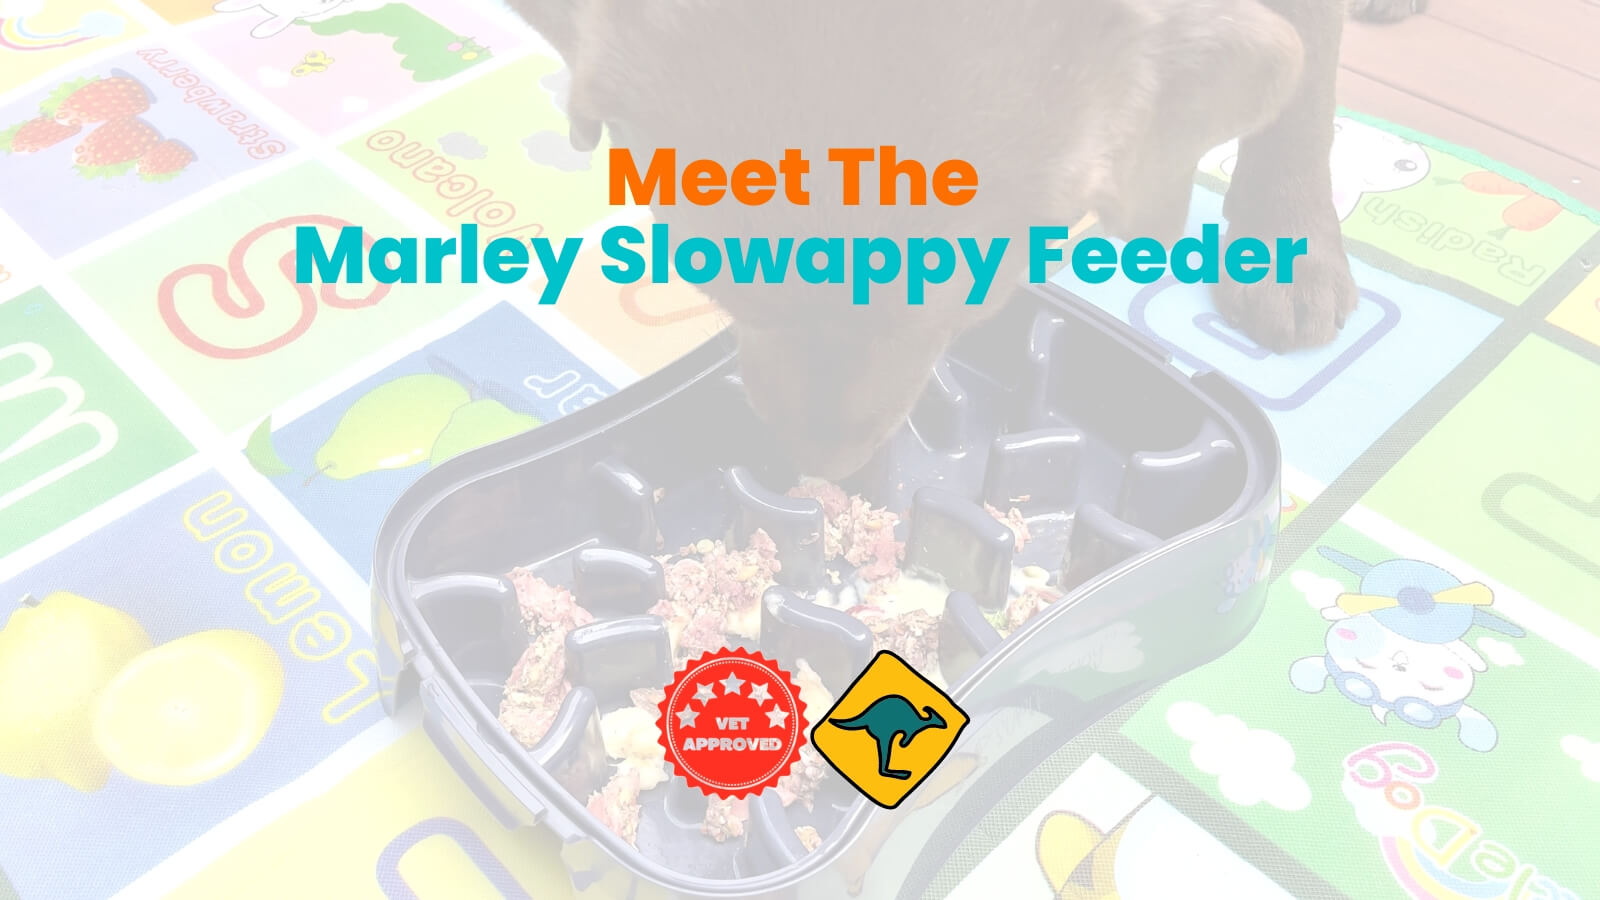 Meet the Marley Slowappy Feeder